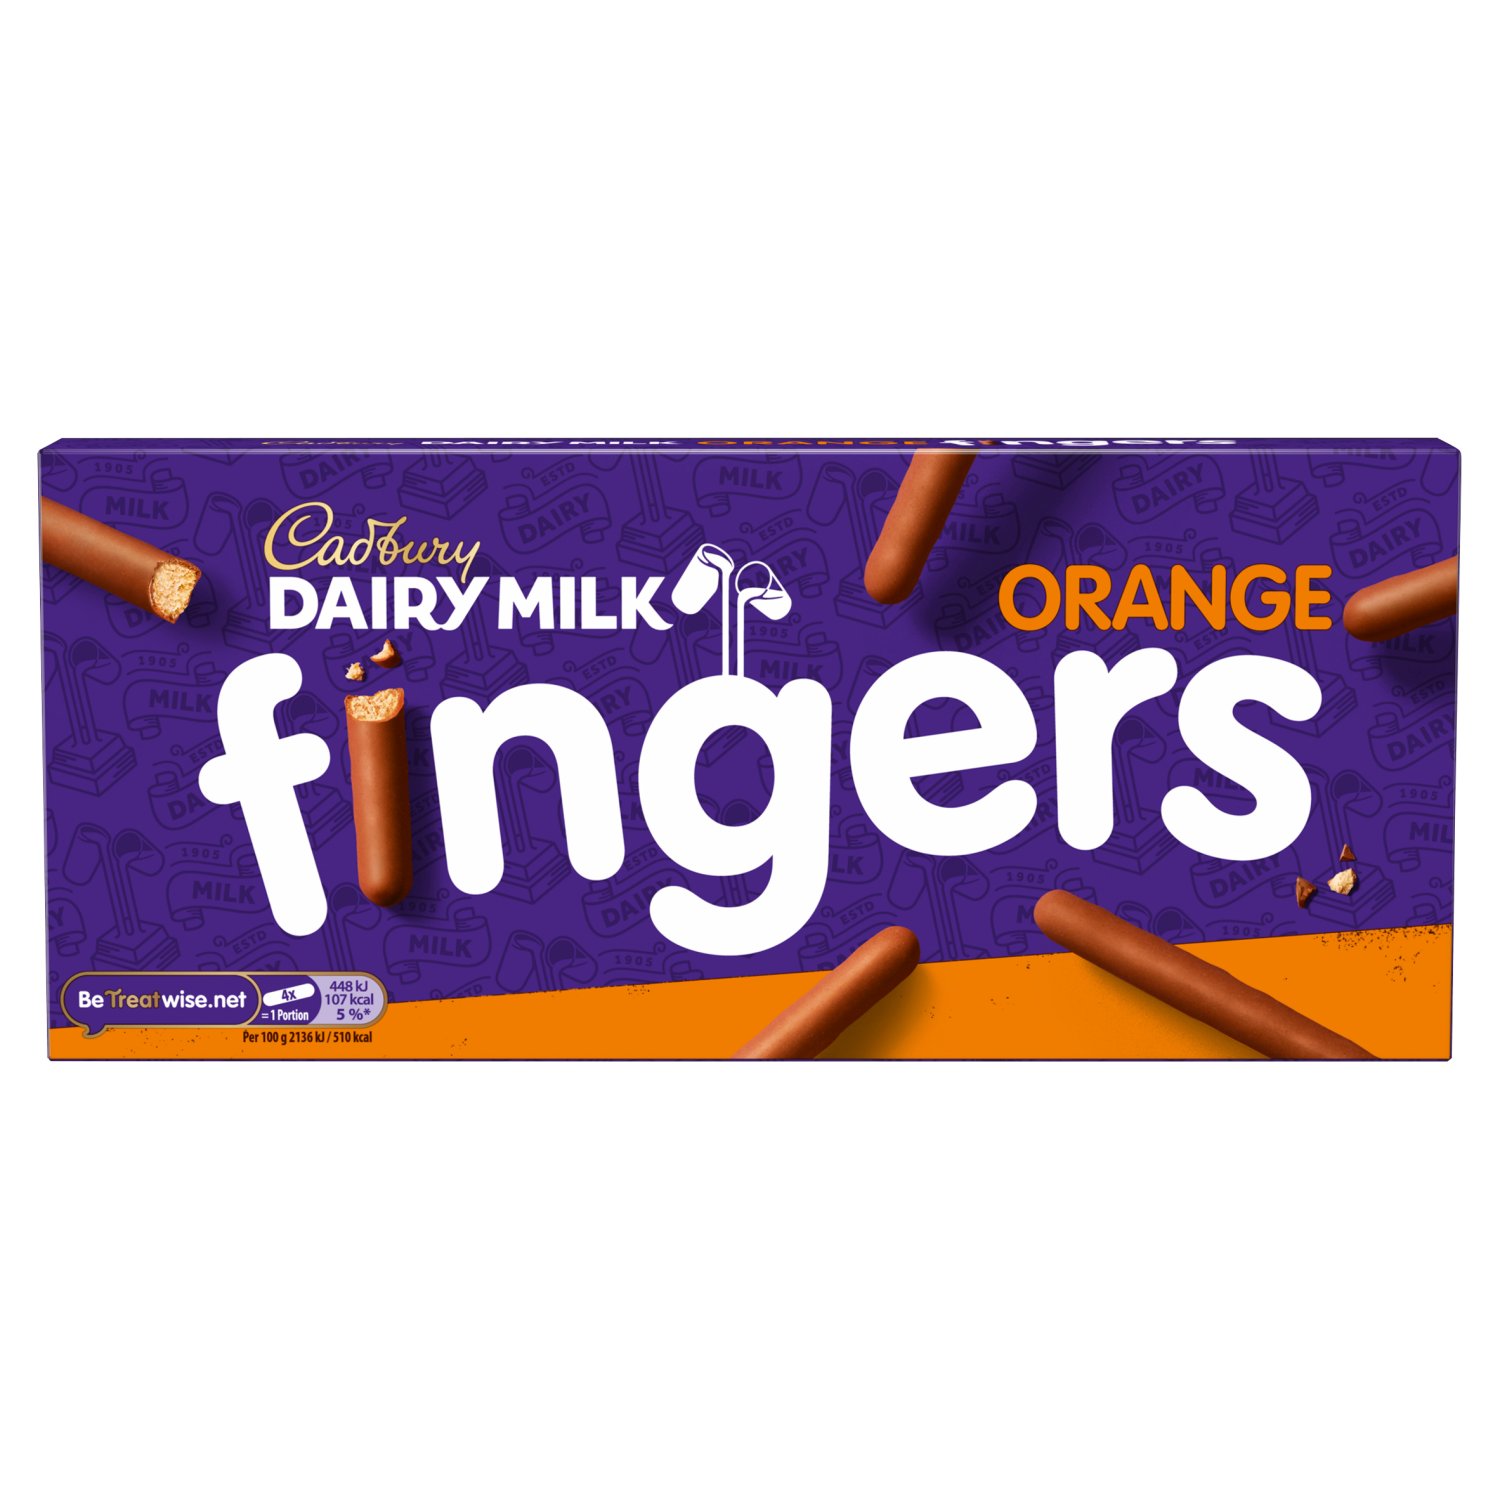 Cadbury Dairy Milk Orange Chocolate Fingers (114 g)